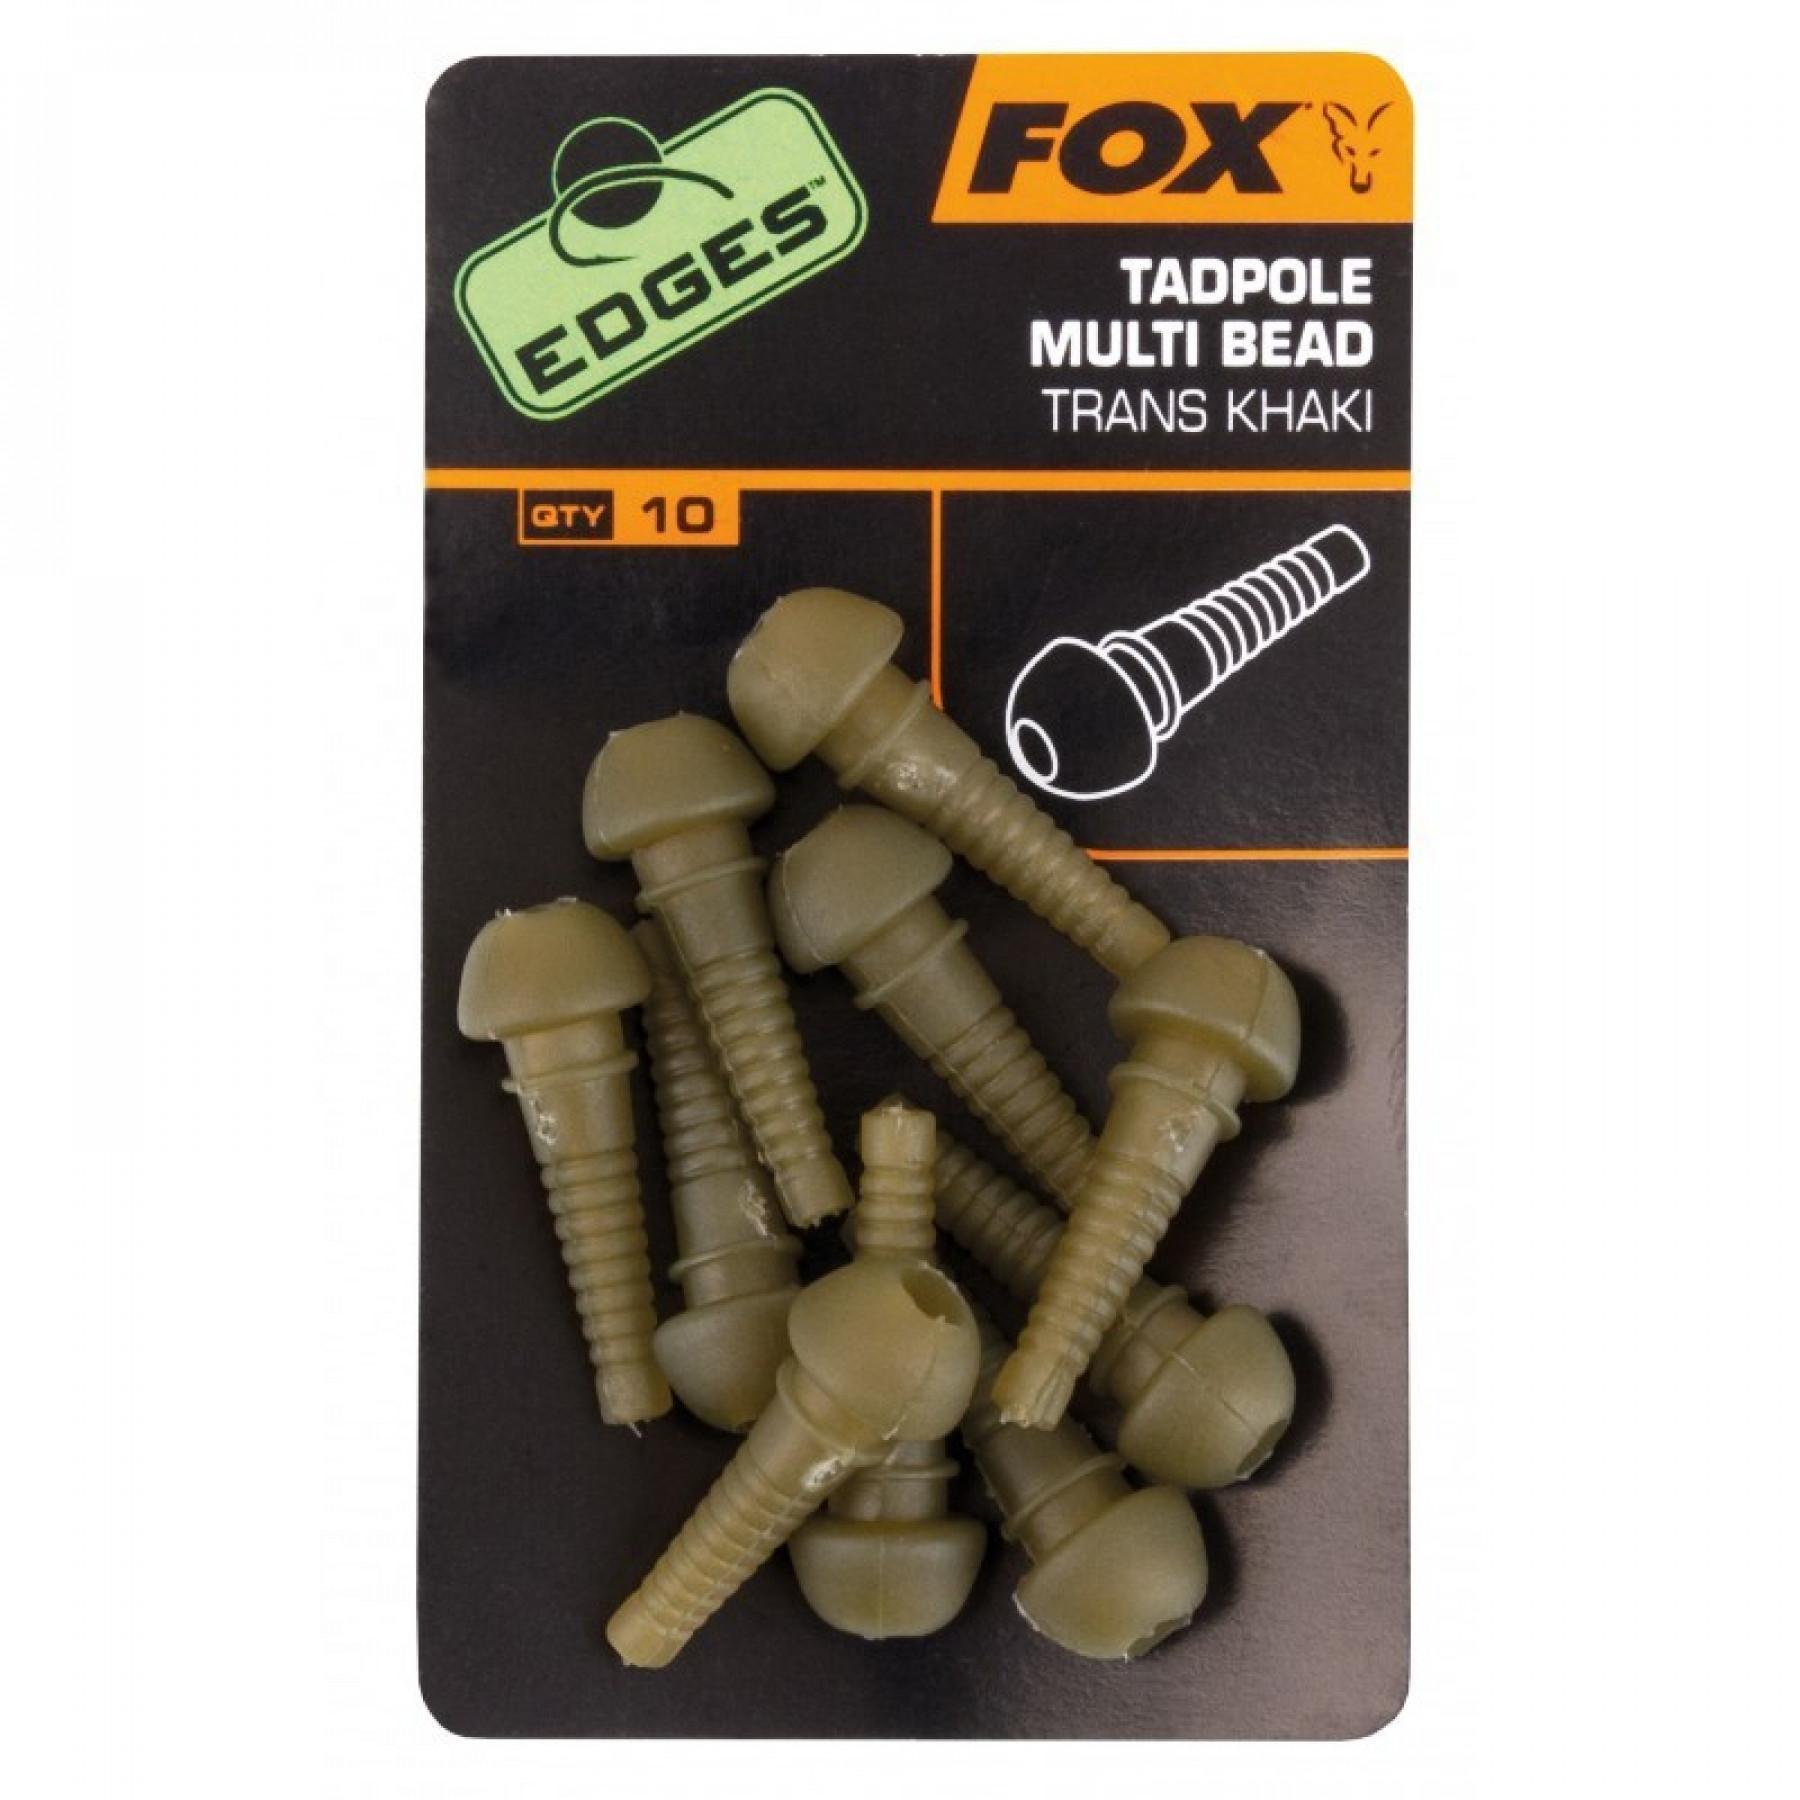 Manica Fox tadpole multi bead